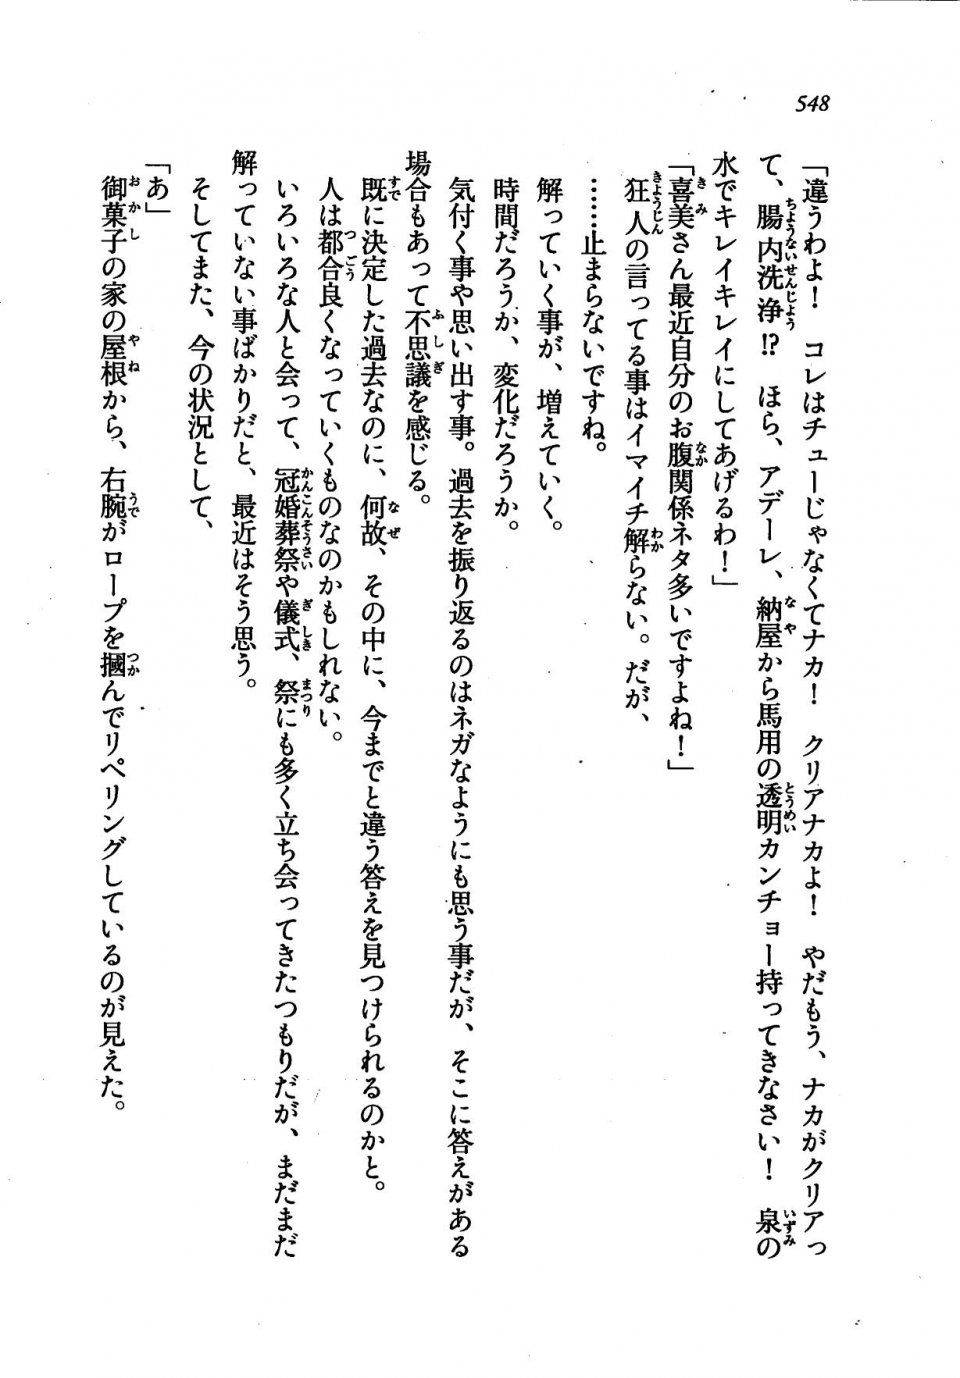 Kyoukai Senjou no Horizon LN Vol 21(8C) Part 2 - Photo #32